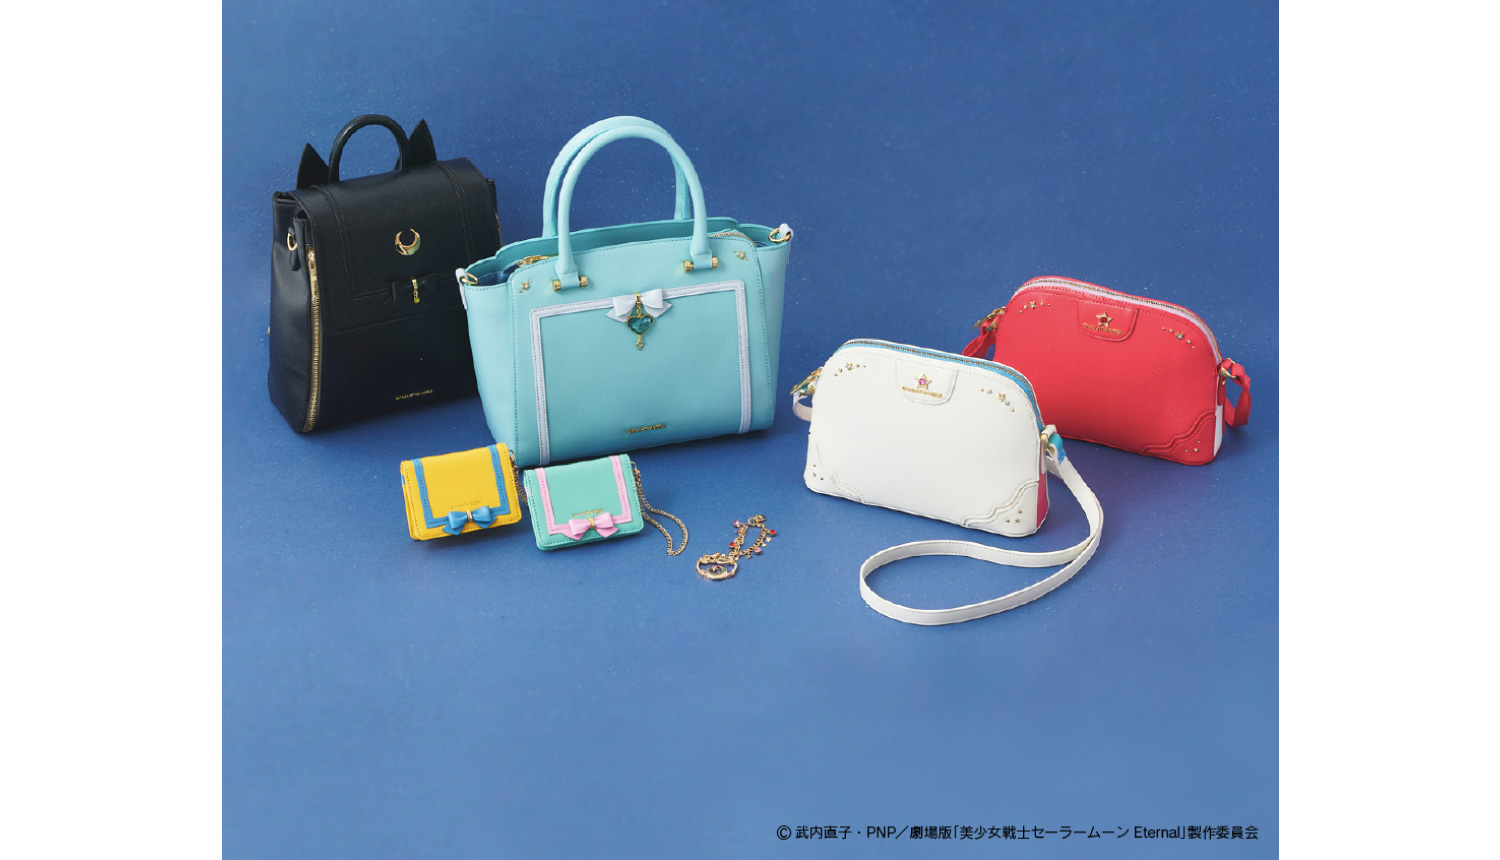 Sailor Moon Handbags And Accessories Released In Collaboration With Samantha Thavasa Moshi Moshi Nippon もしもしにっぽん